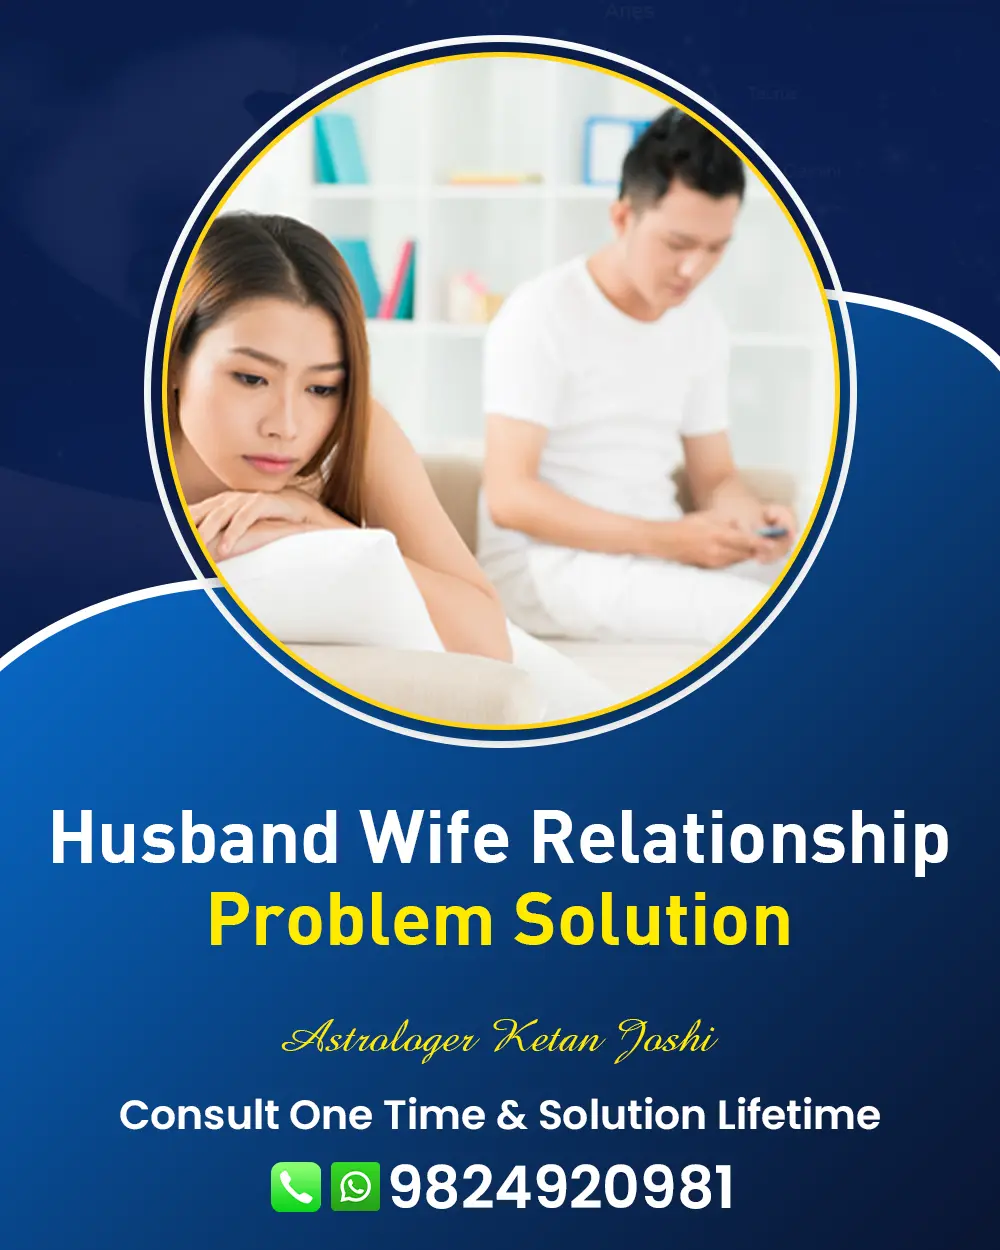 Husband Wife Problem Solution Astrologer In Surat